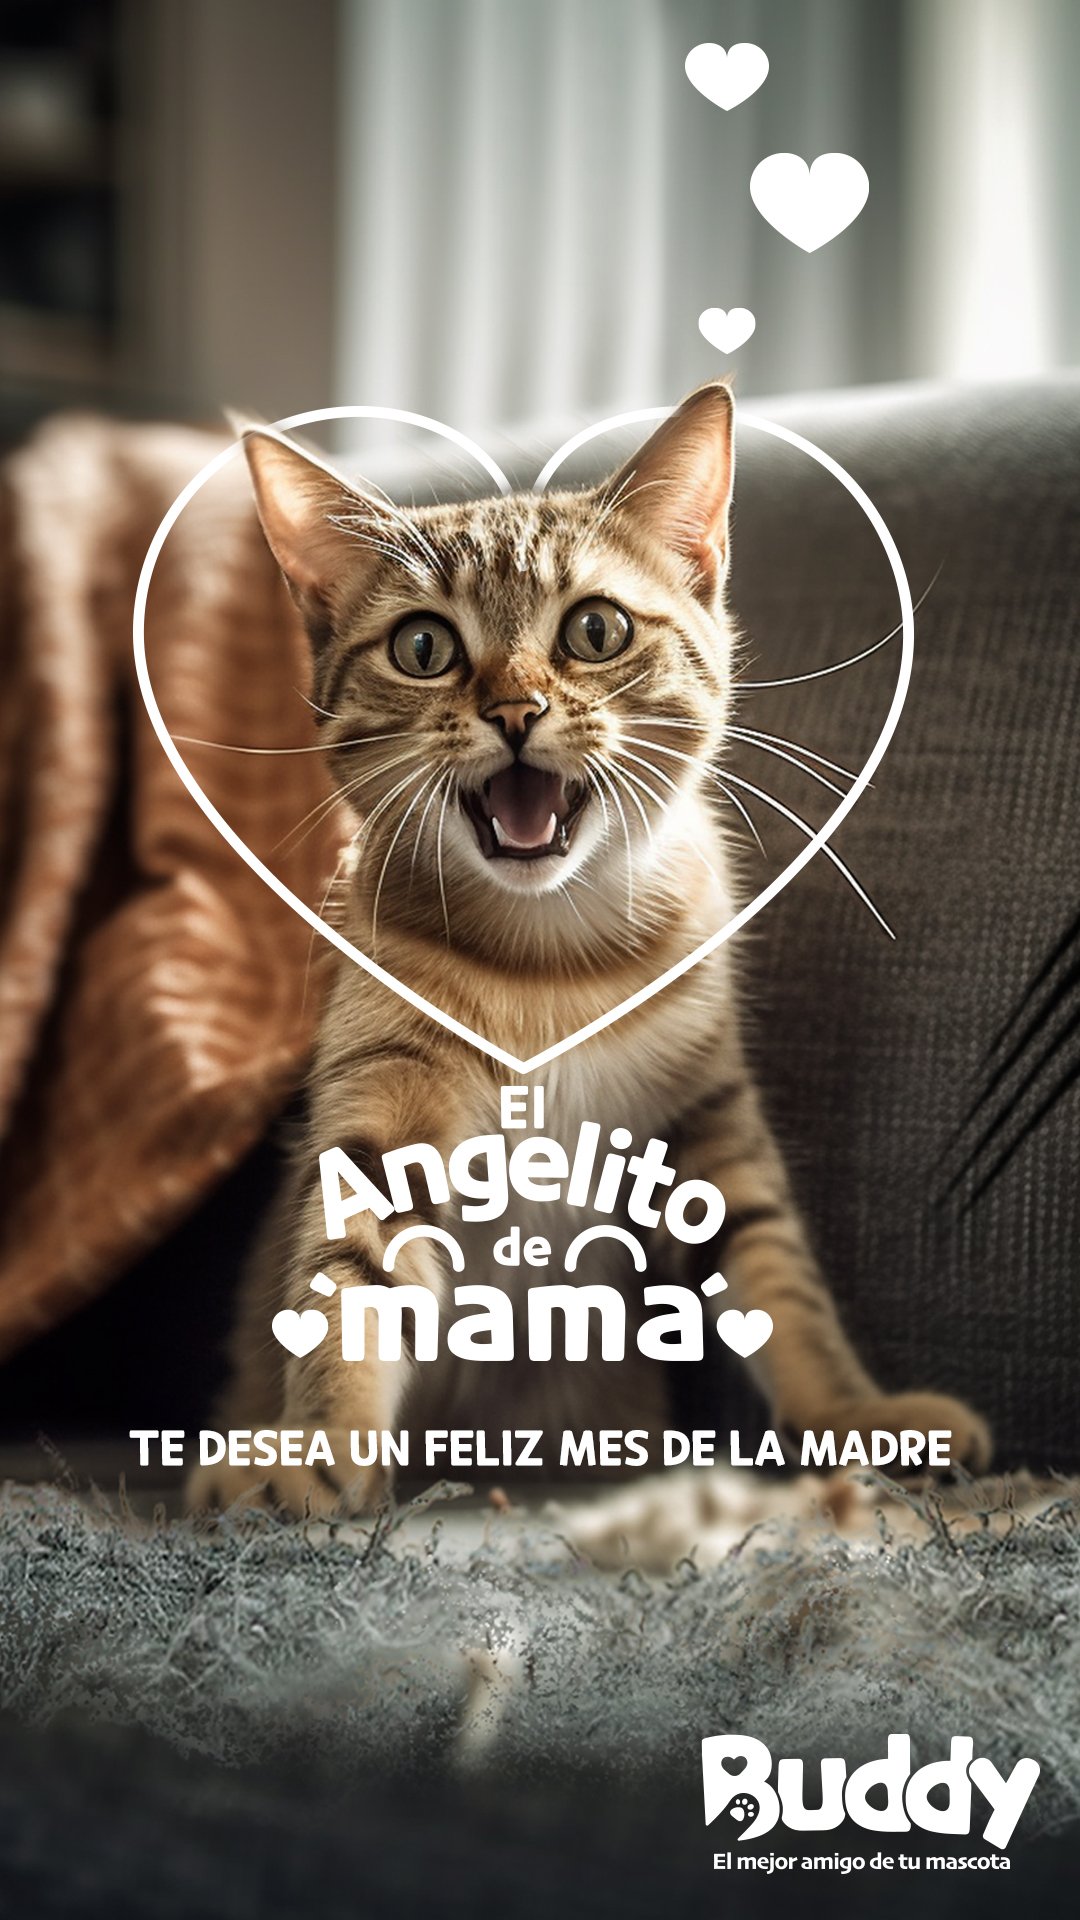 El Angelito de mamá story Kitty